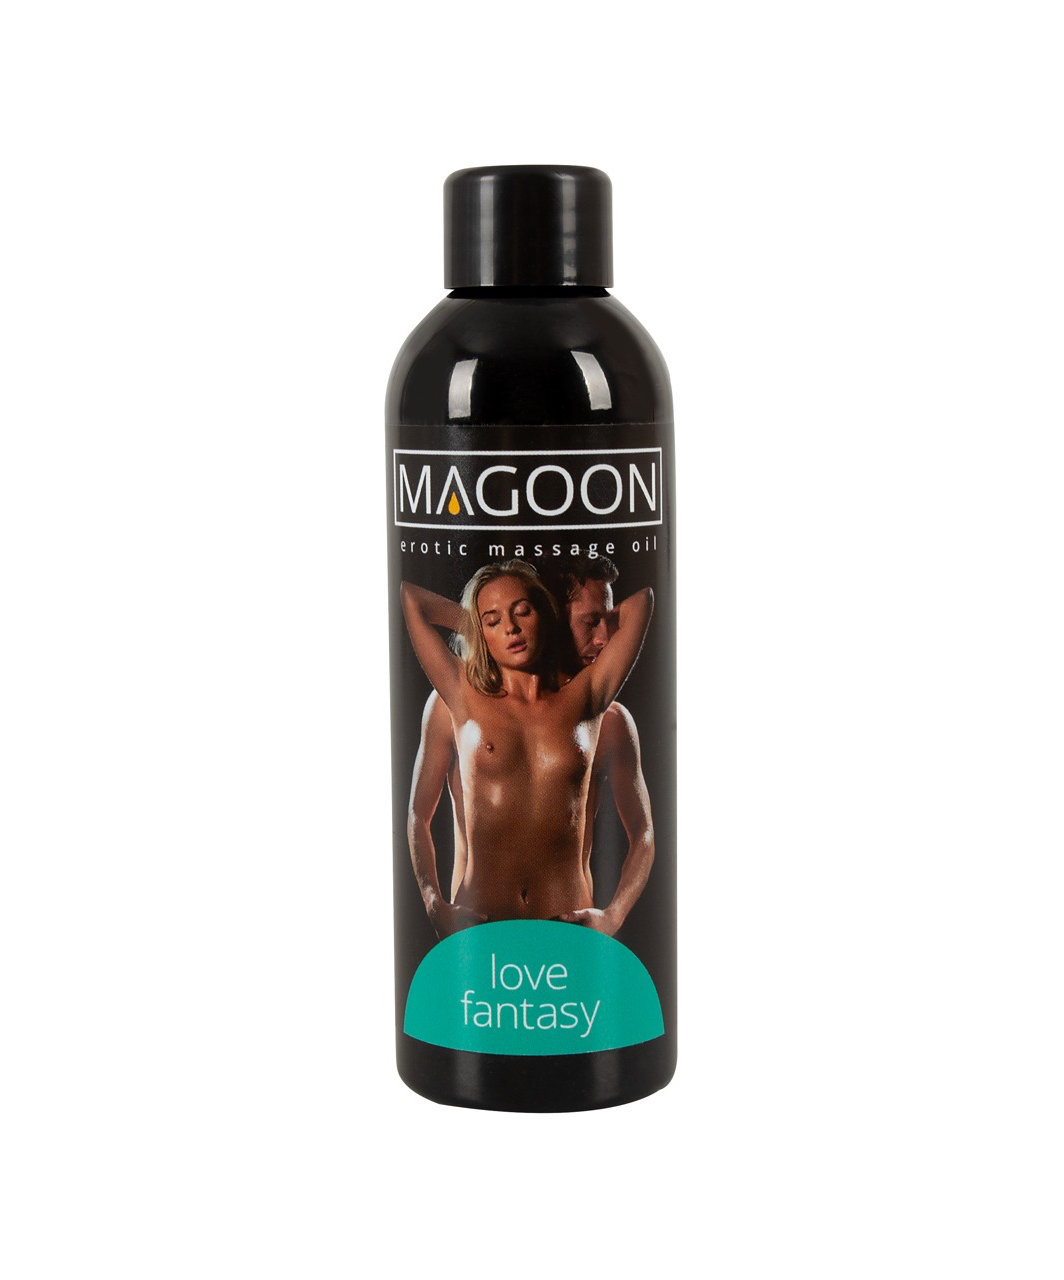 Magoon массажное масло (100 мл)